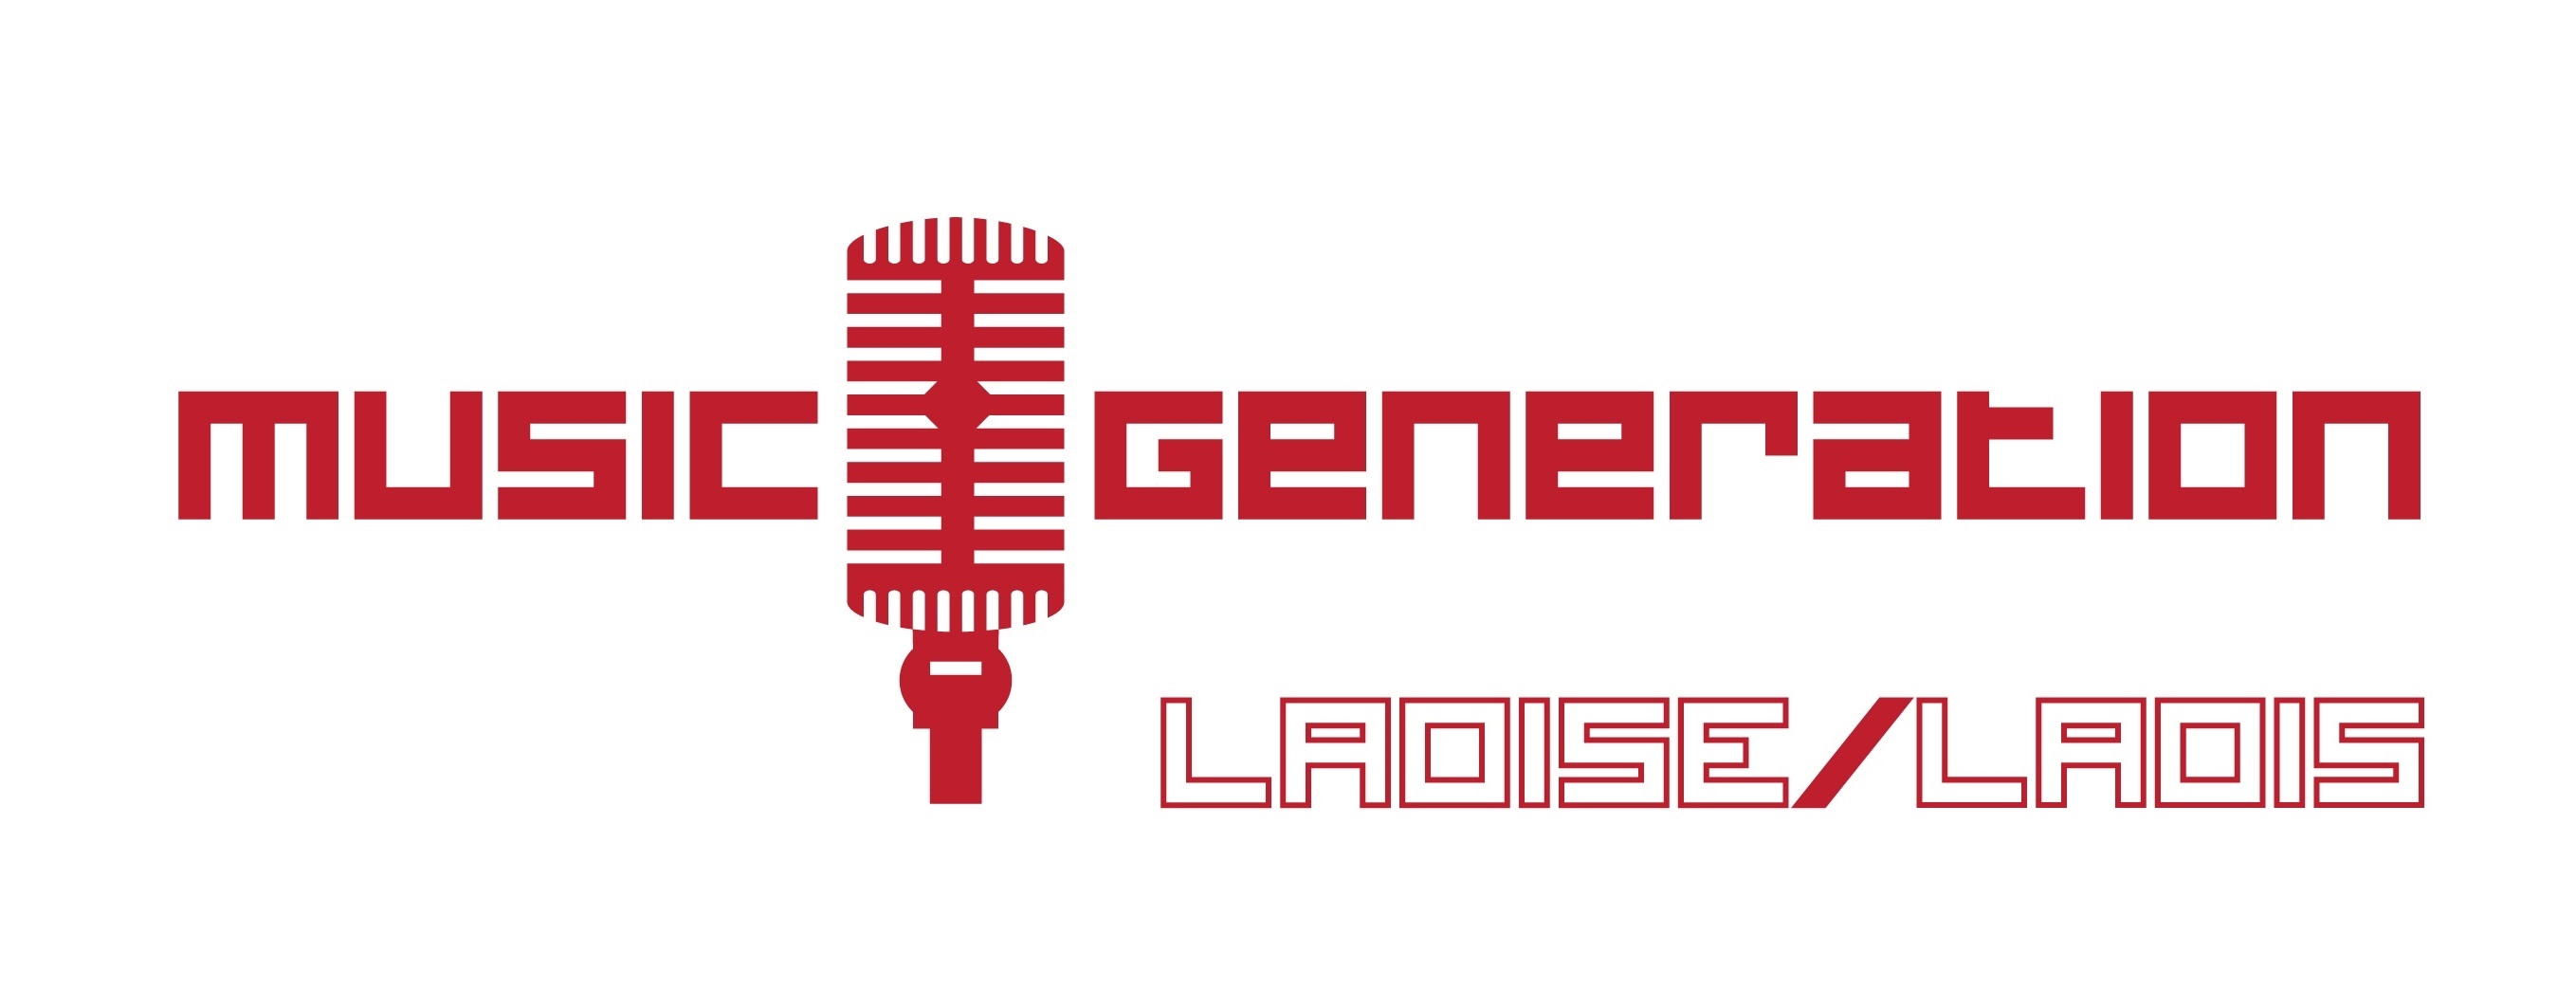 MUSICGENERATION Laois Logo